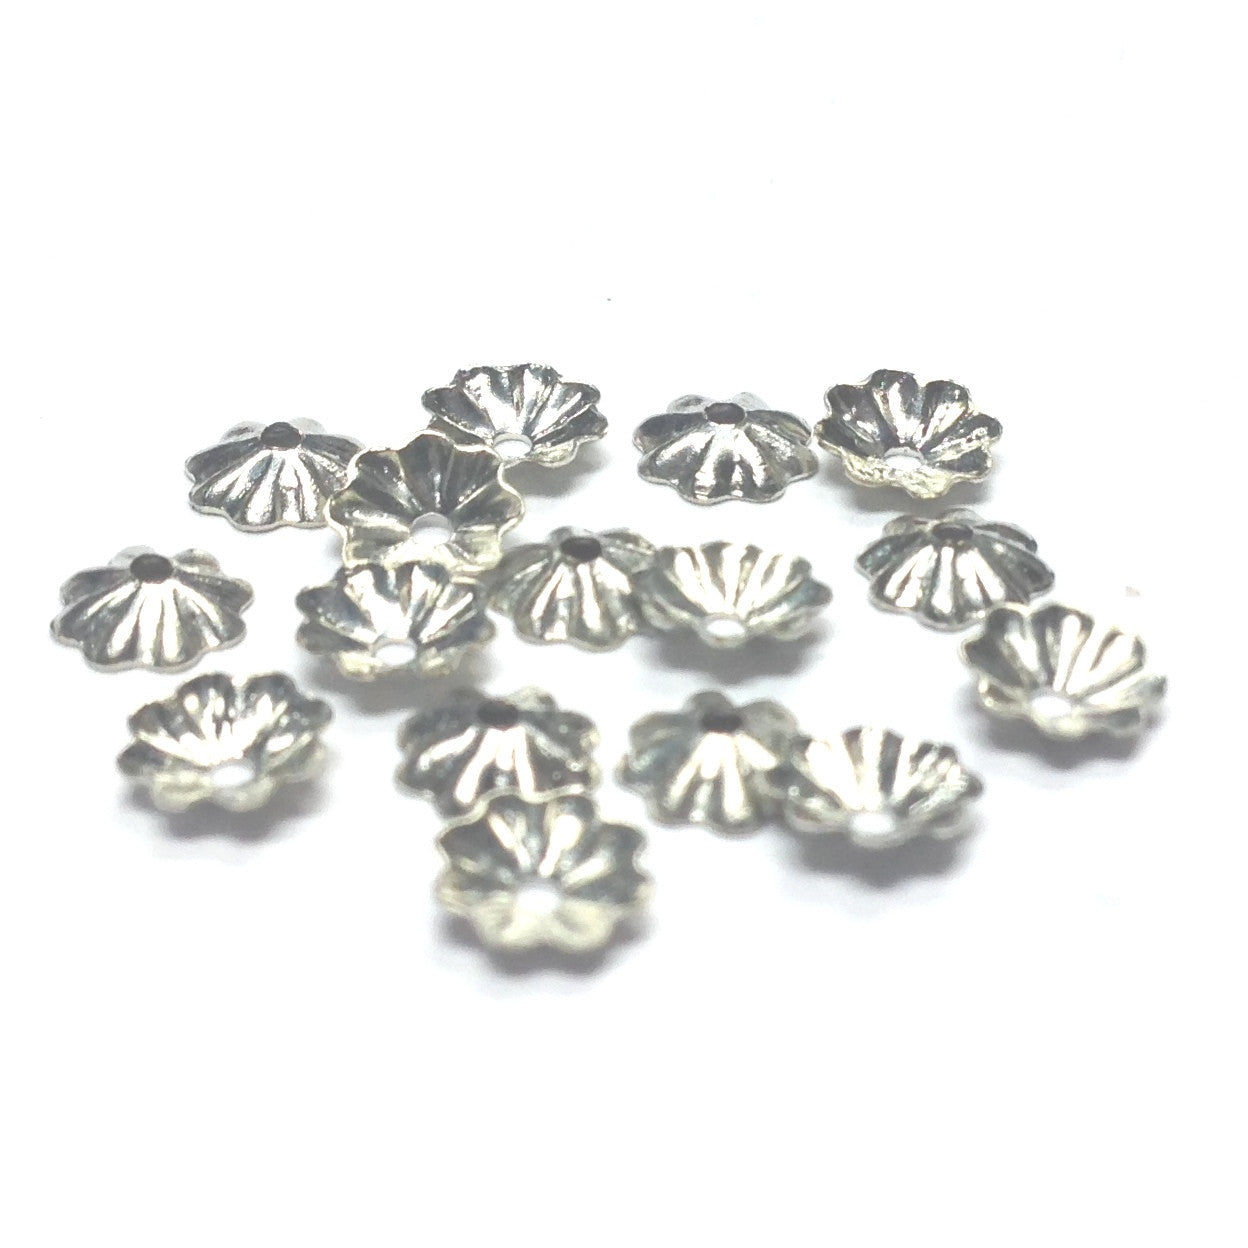 5MM Nickel Fluted Bead Cap (144 pieces)